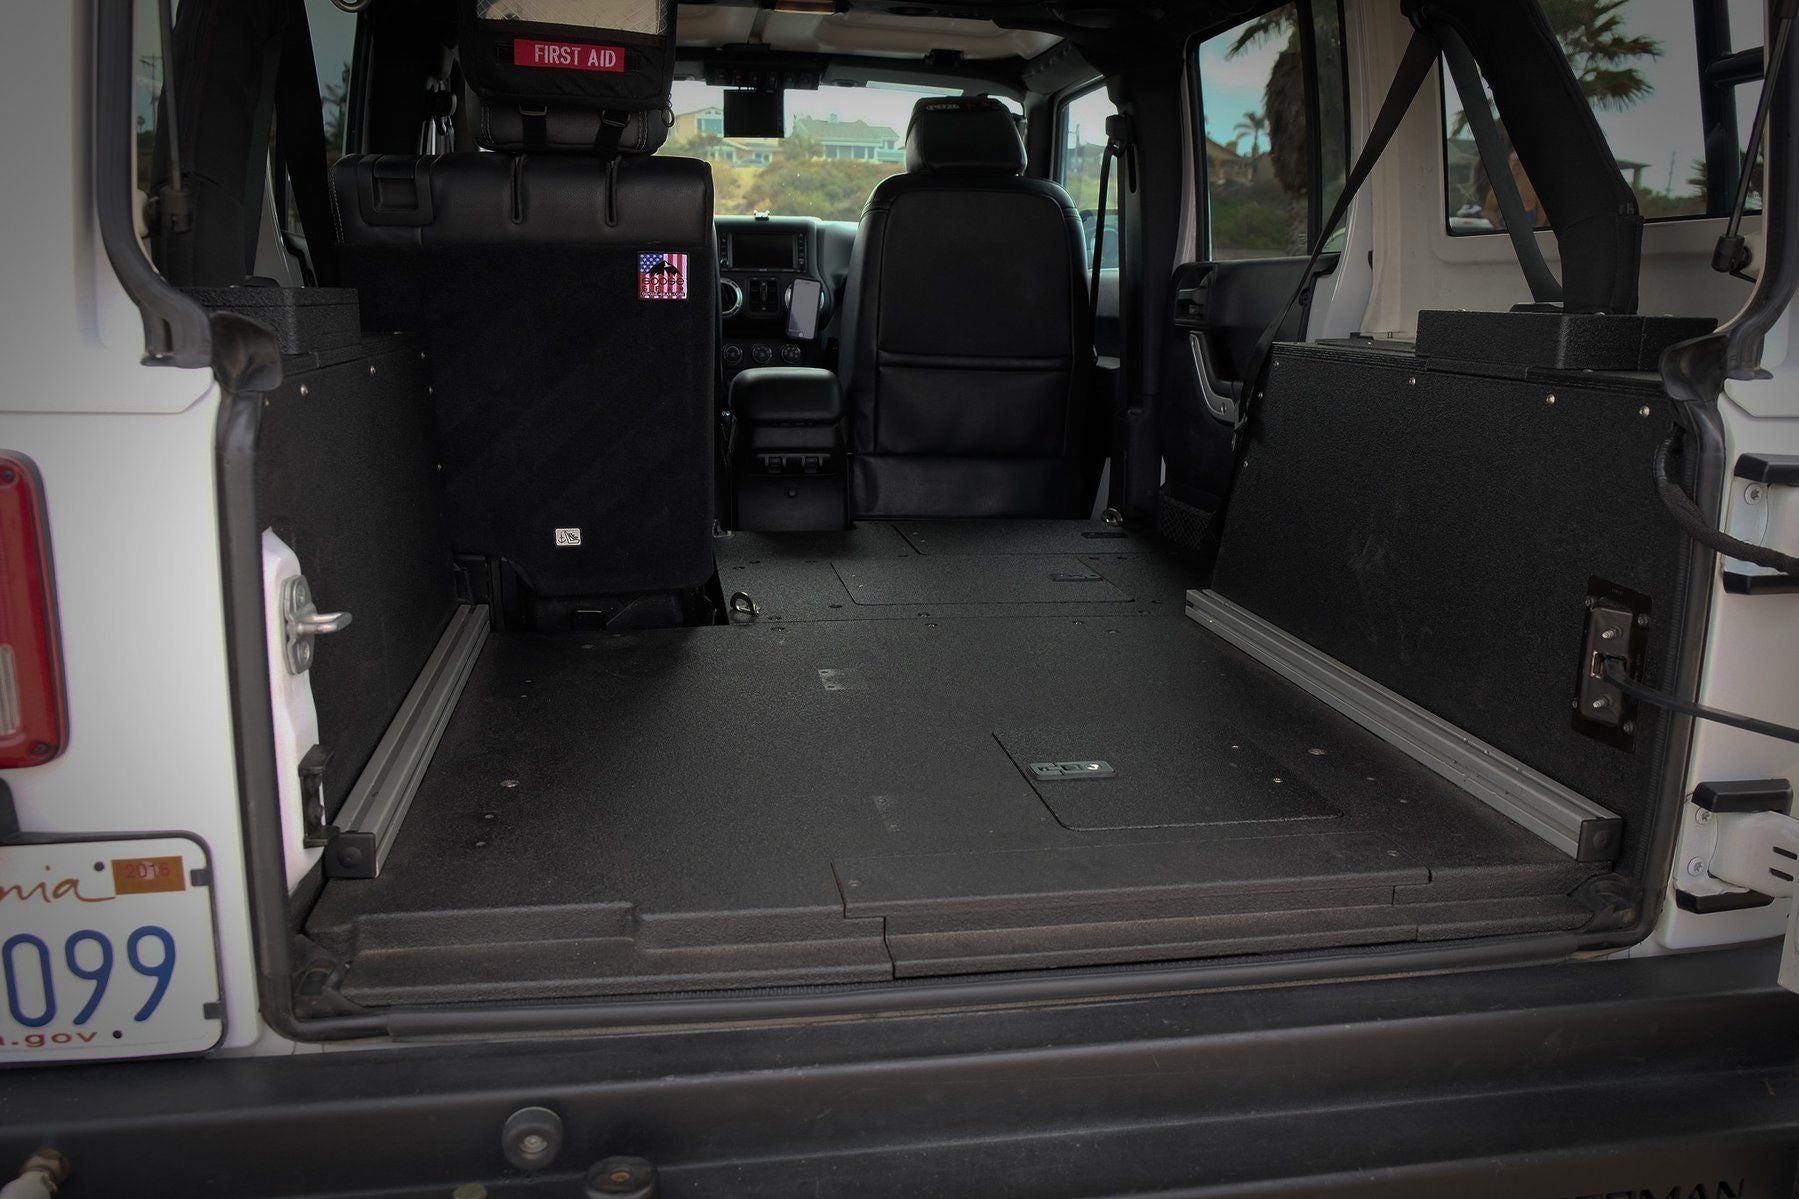 '07-18 Jeep JKU Sleeping Platform Interior Accessoires Goose Gear display